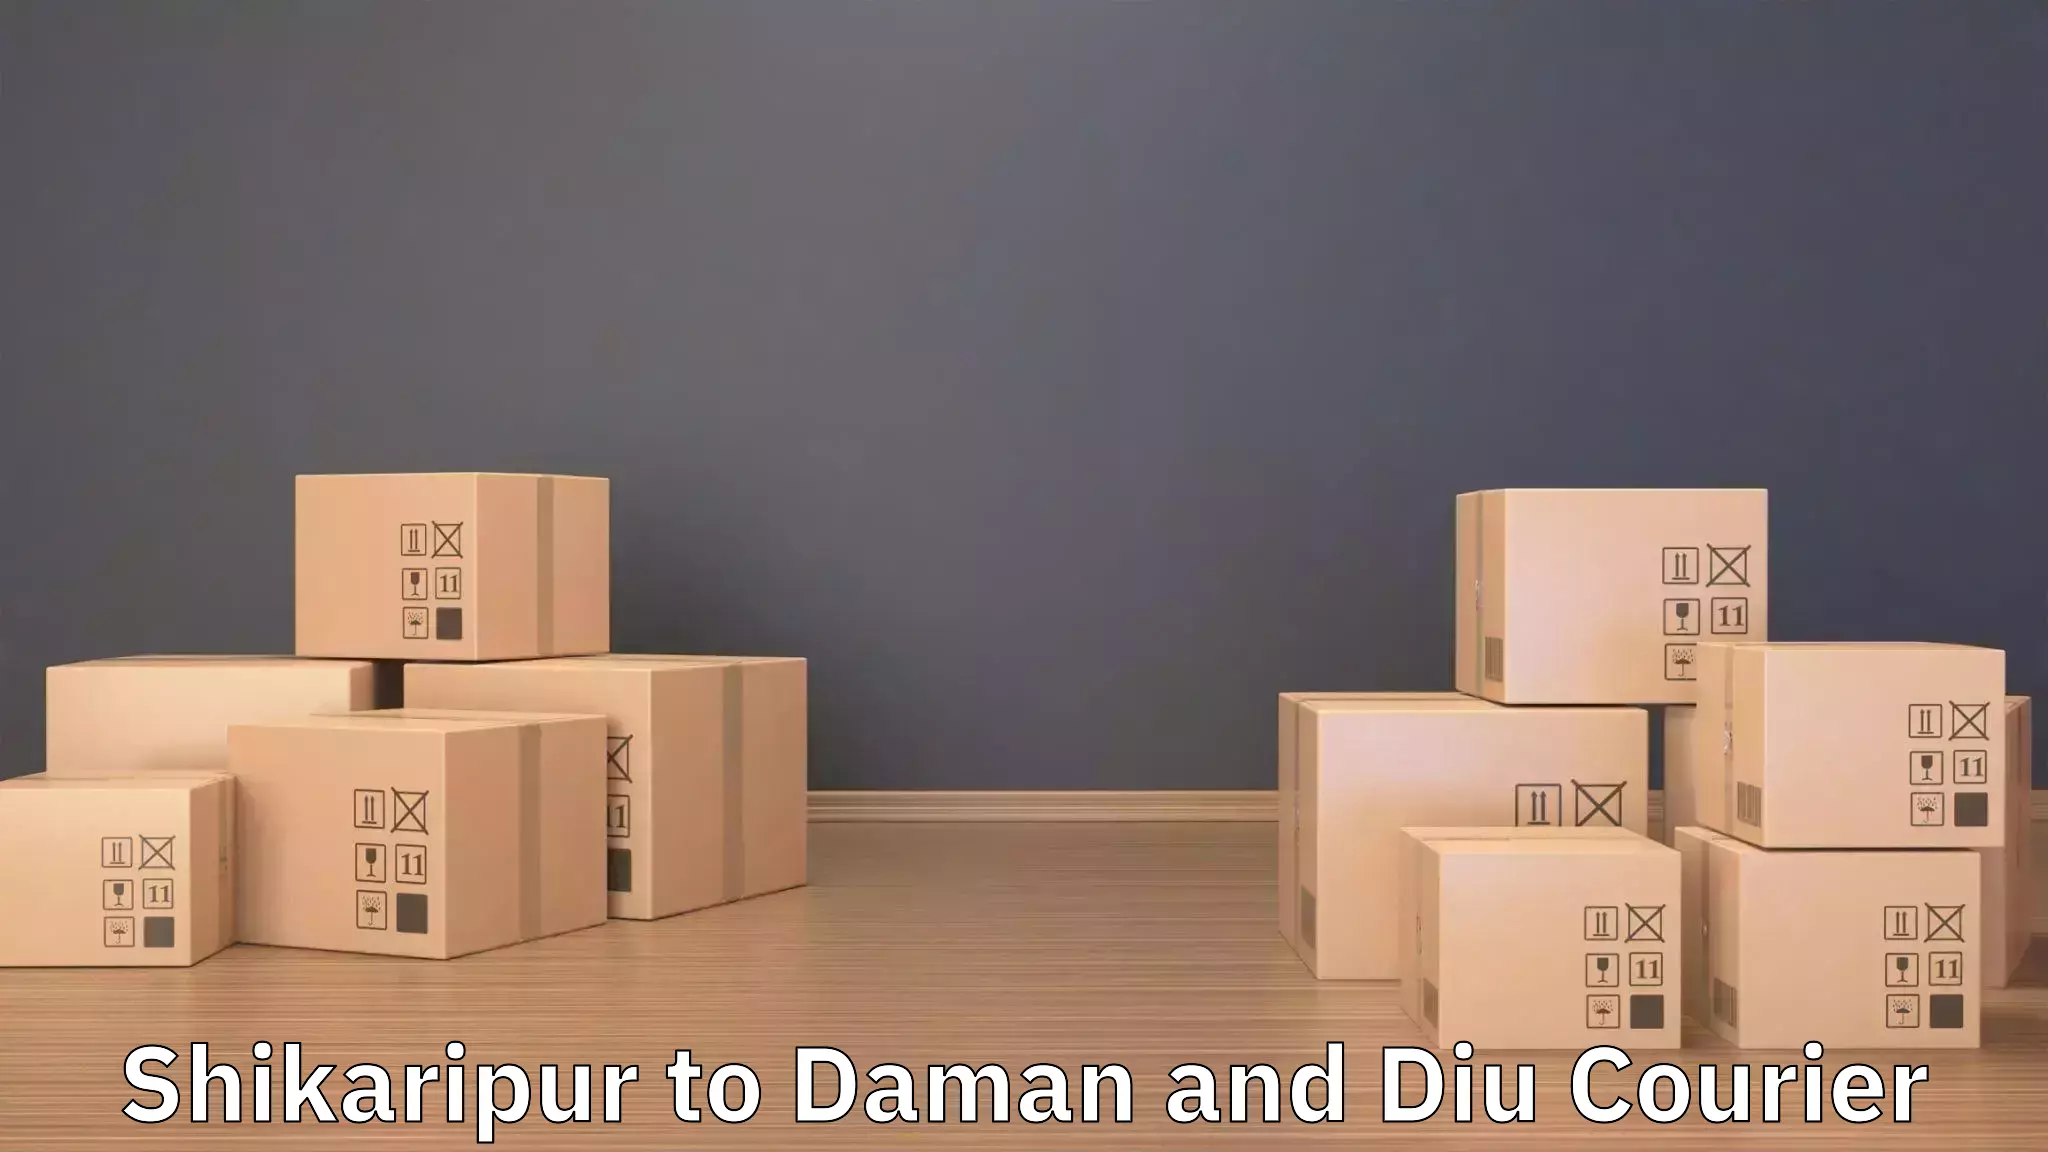 Full-service movers in Shikaripur to Diu